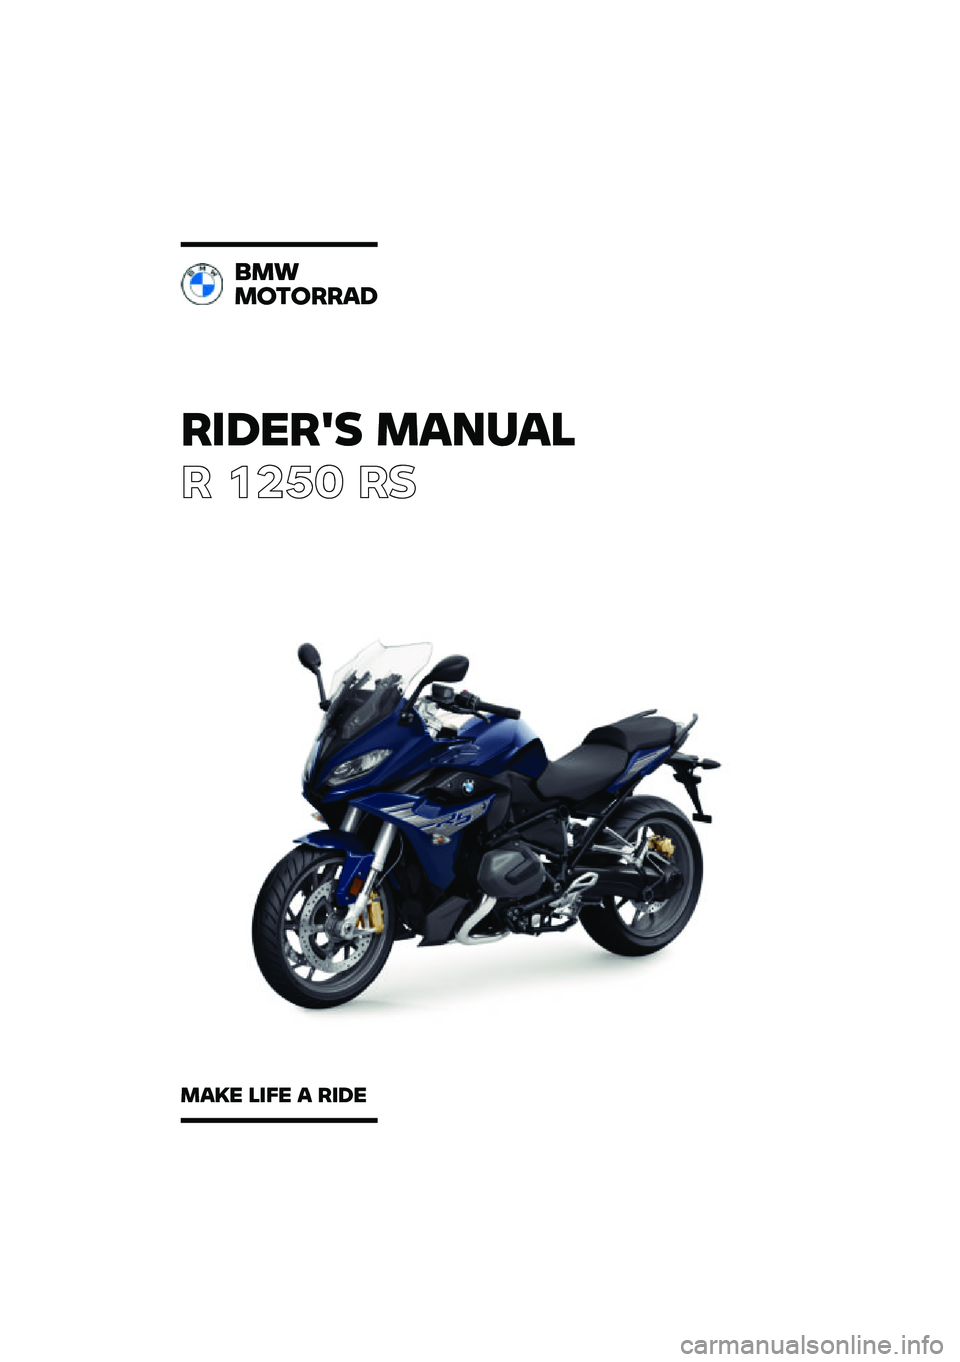 BMW MOTORRAD R 1250 RS 2021  Riders Manual (in English) ������� �\b�	�
��	�\f
� ����	 ��
�
�\b�
�\b������	�
�\b�	�� �\f��� �	 ���� 